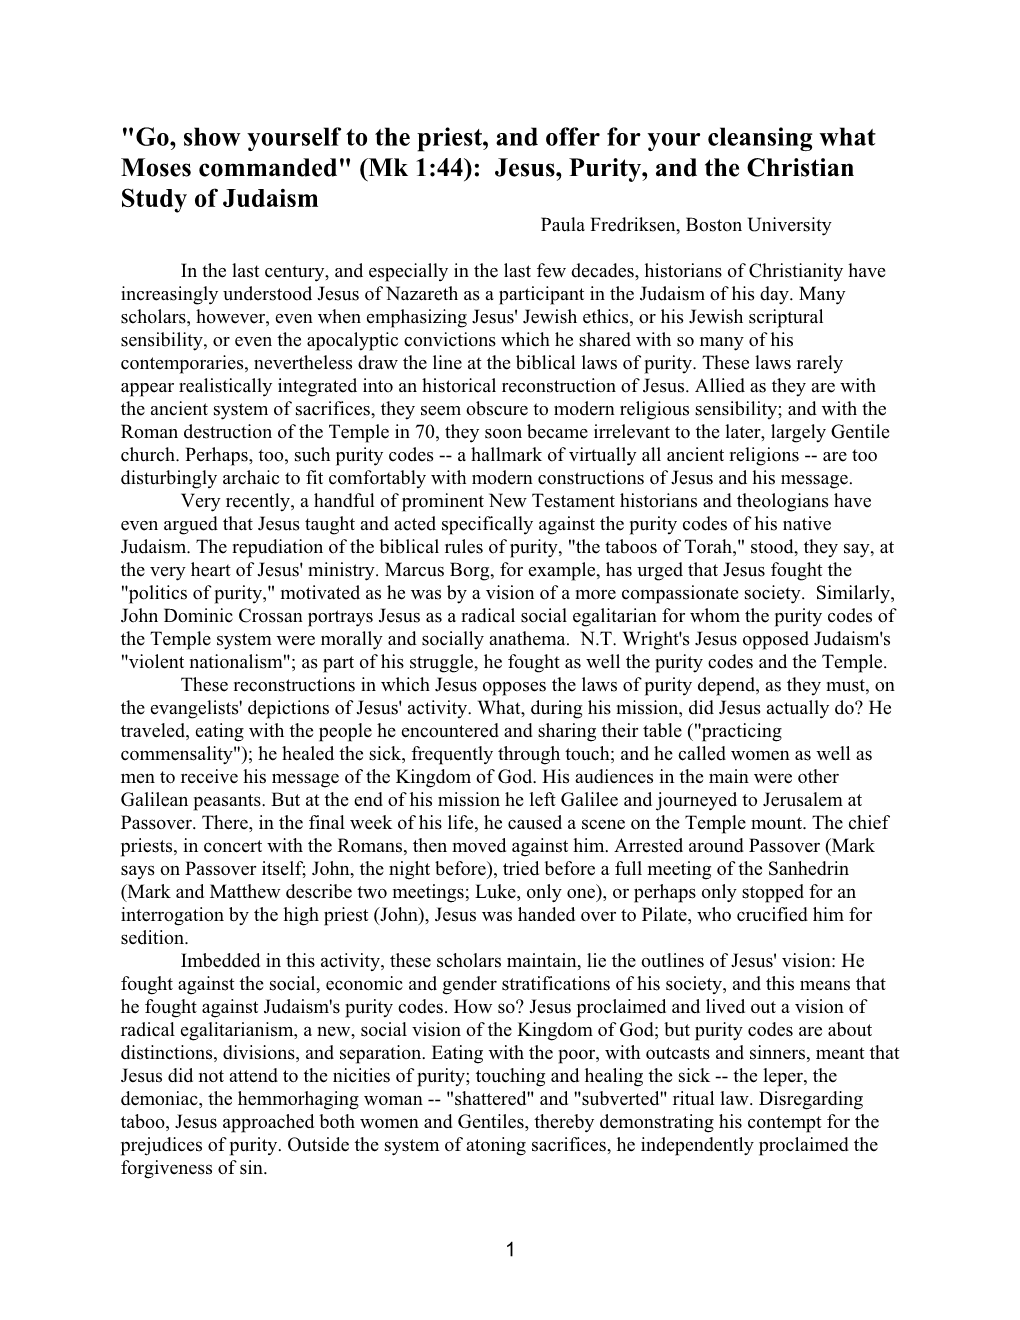 (Mk 1:44): Jesus, Purity, and the Christian Study of Judaism Paula Fredriksen, Boston University